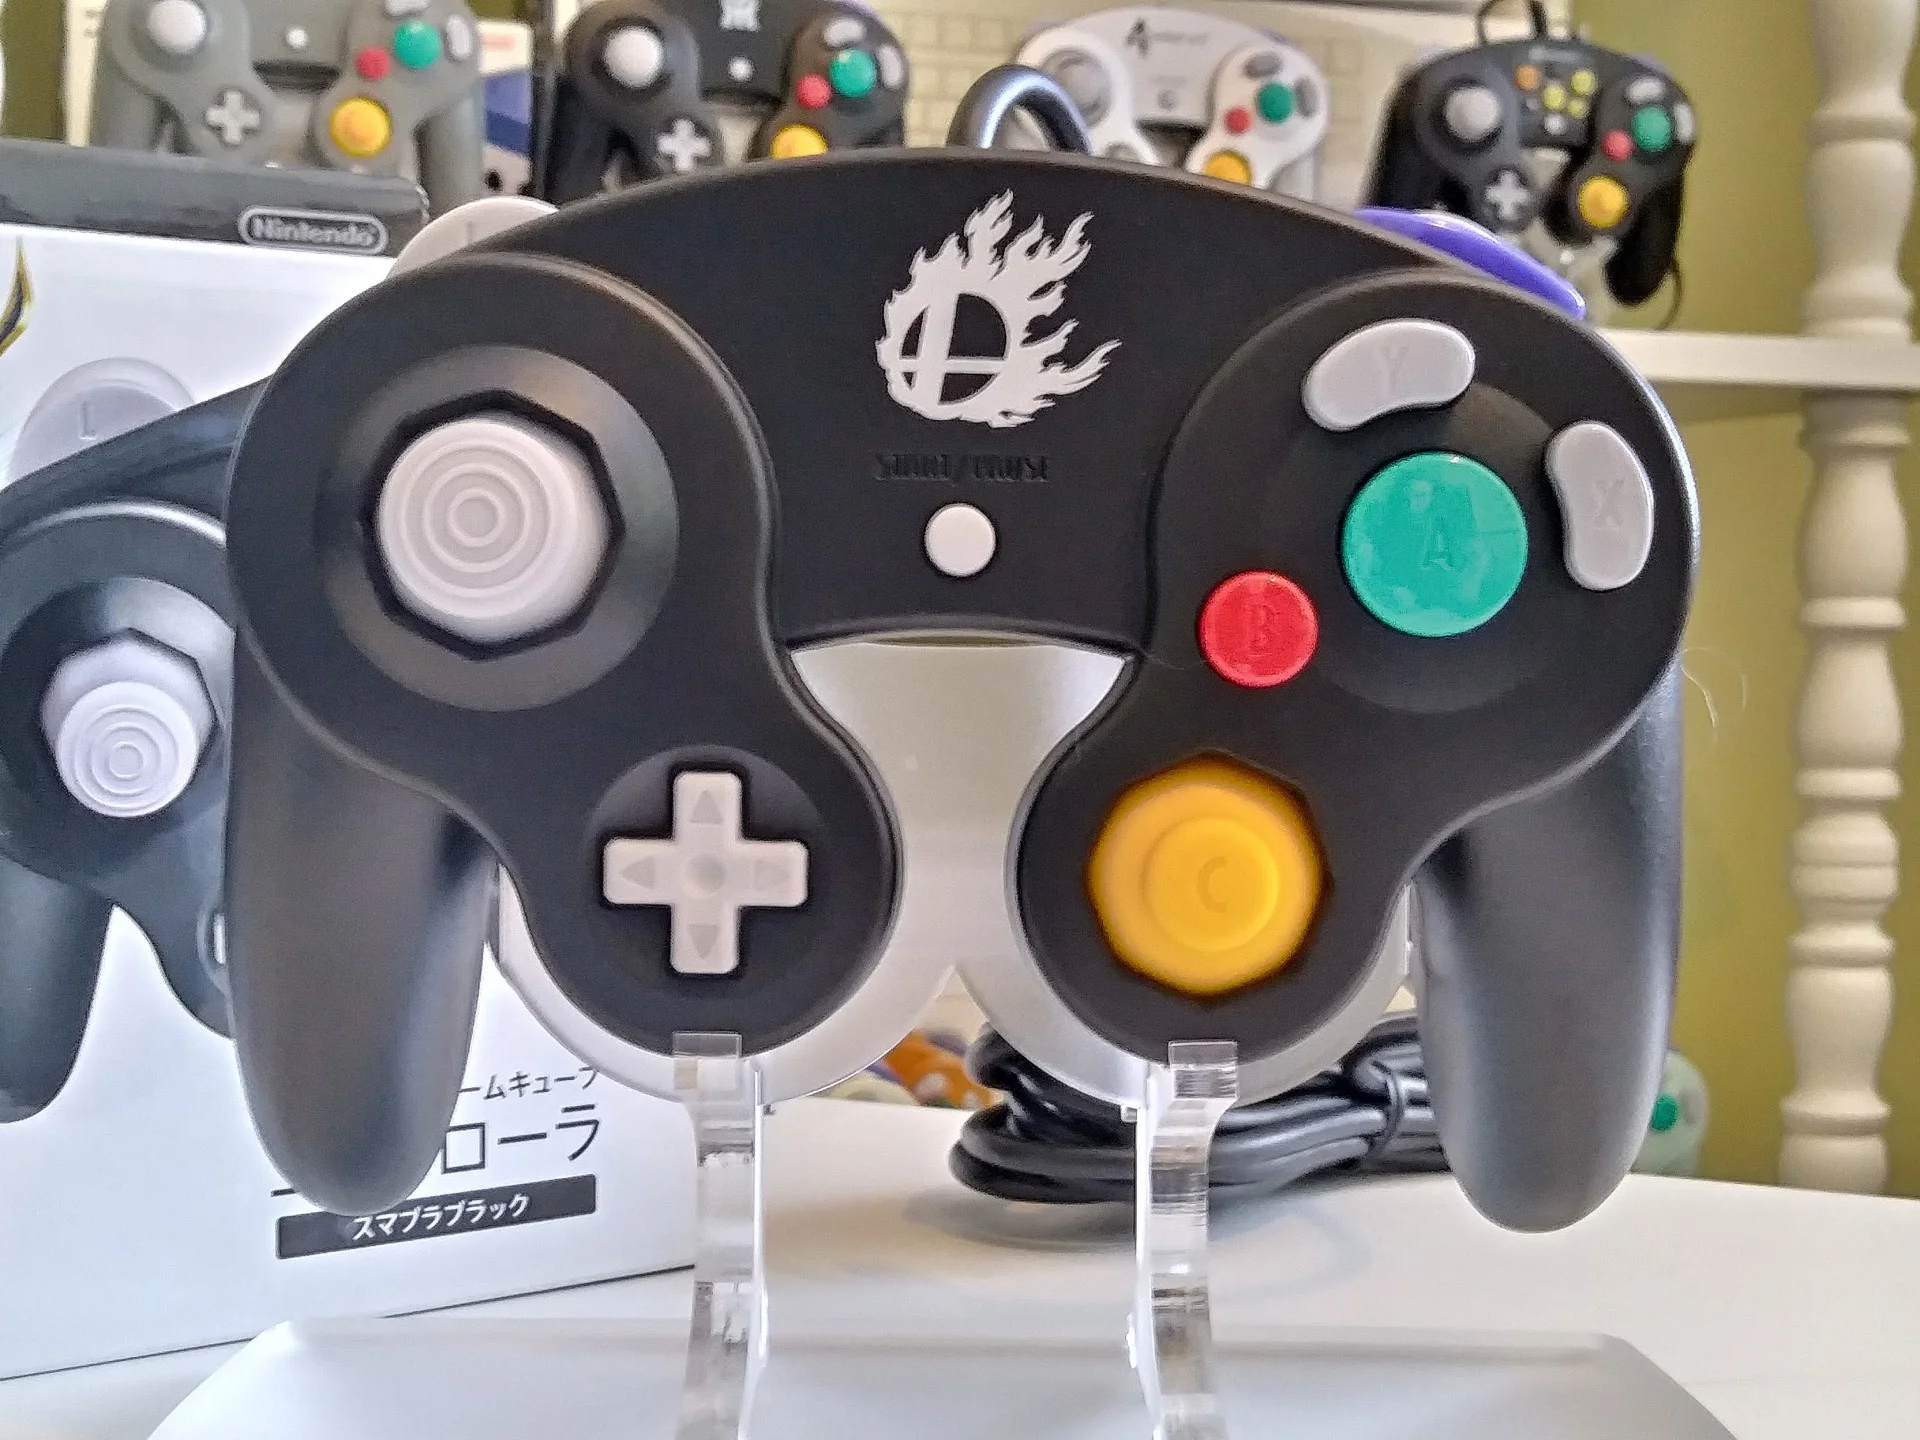  Nintendo GameCube Super Smash Bros. Black Controller [EU]